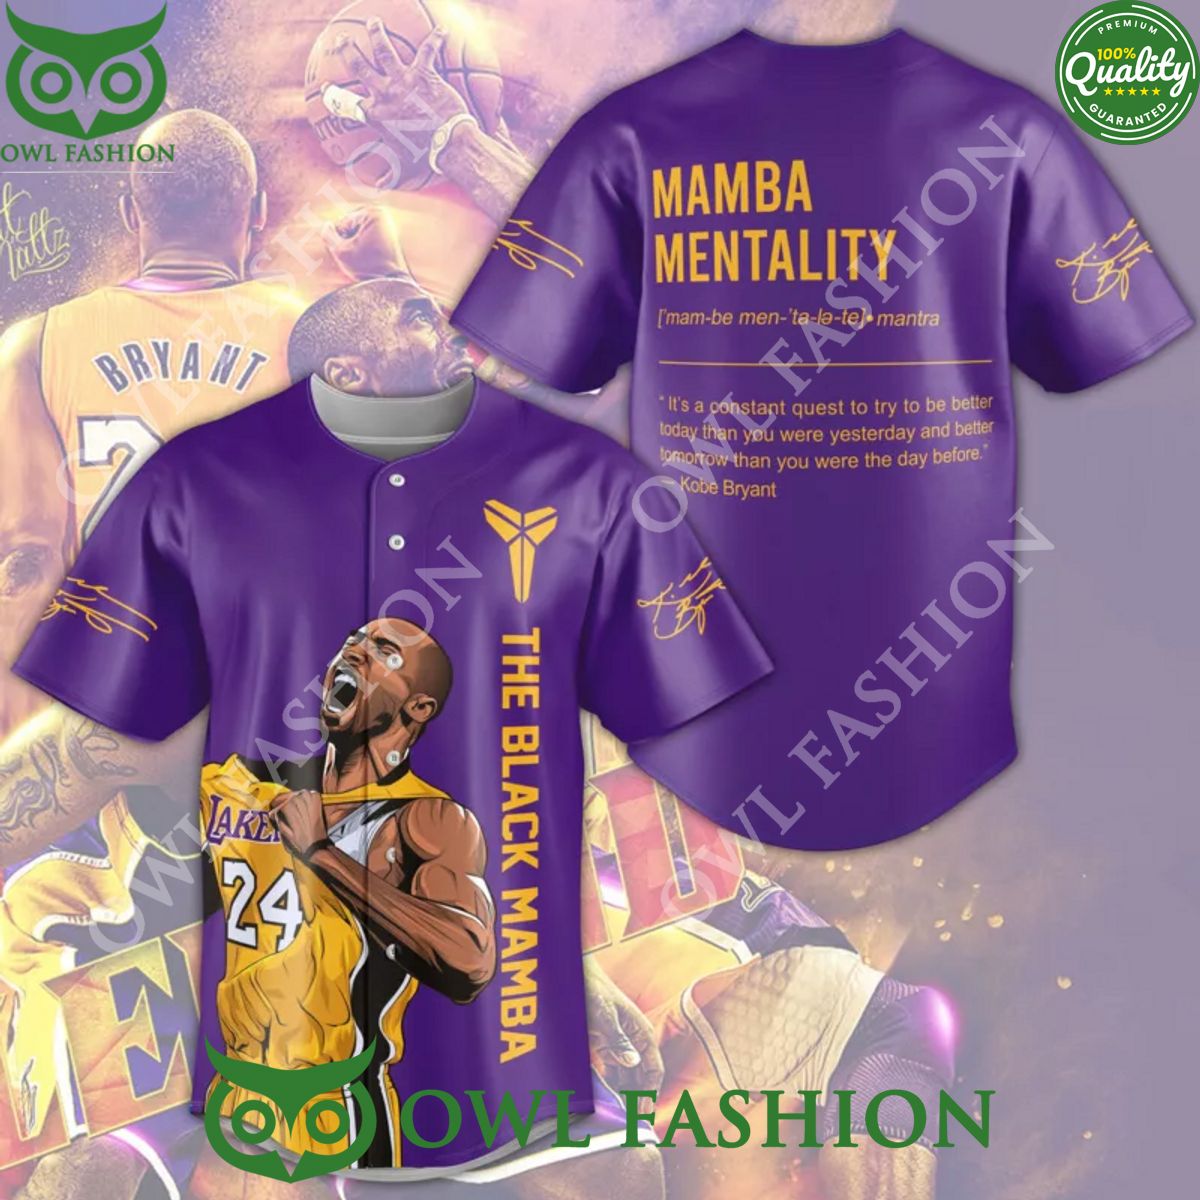 legend kobe bryant the black mamba mentalilty printed purple baseball jersey 1 2VS95.jpg